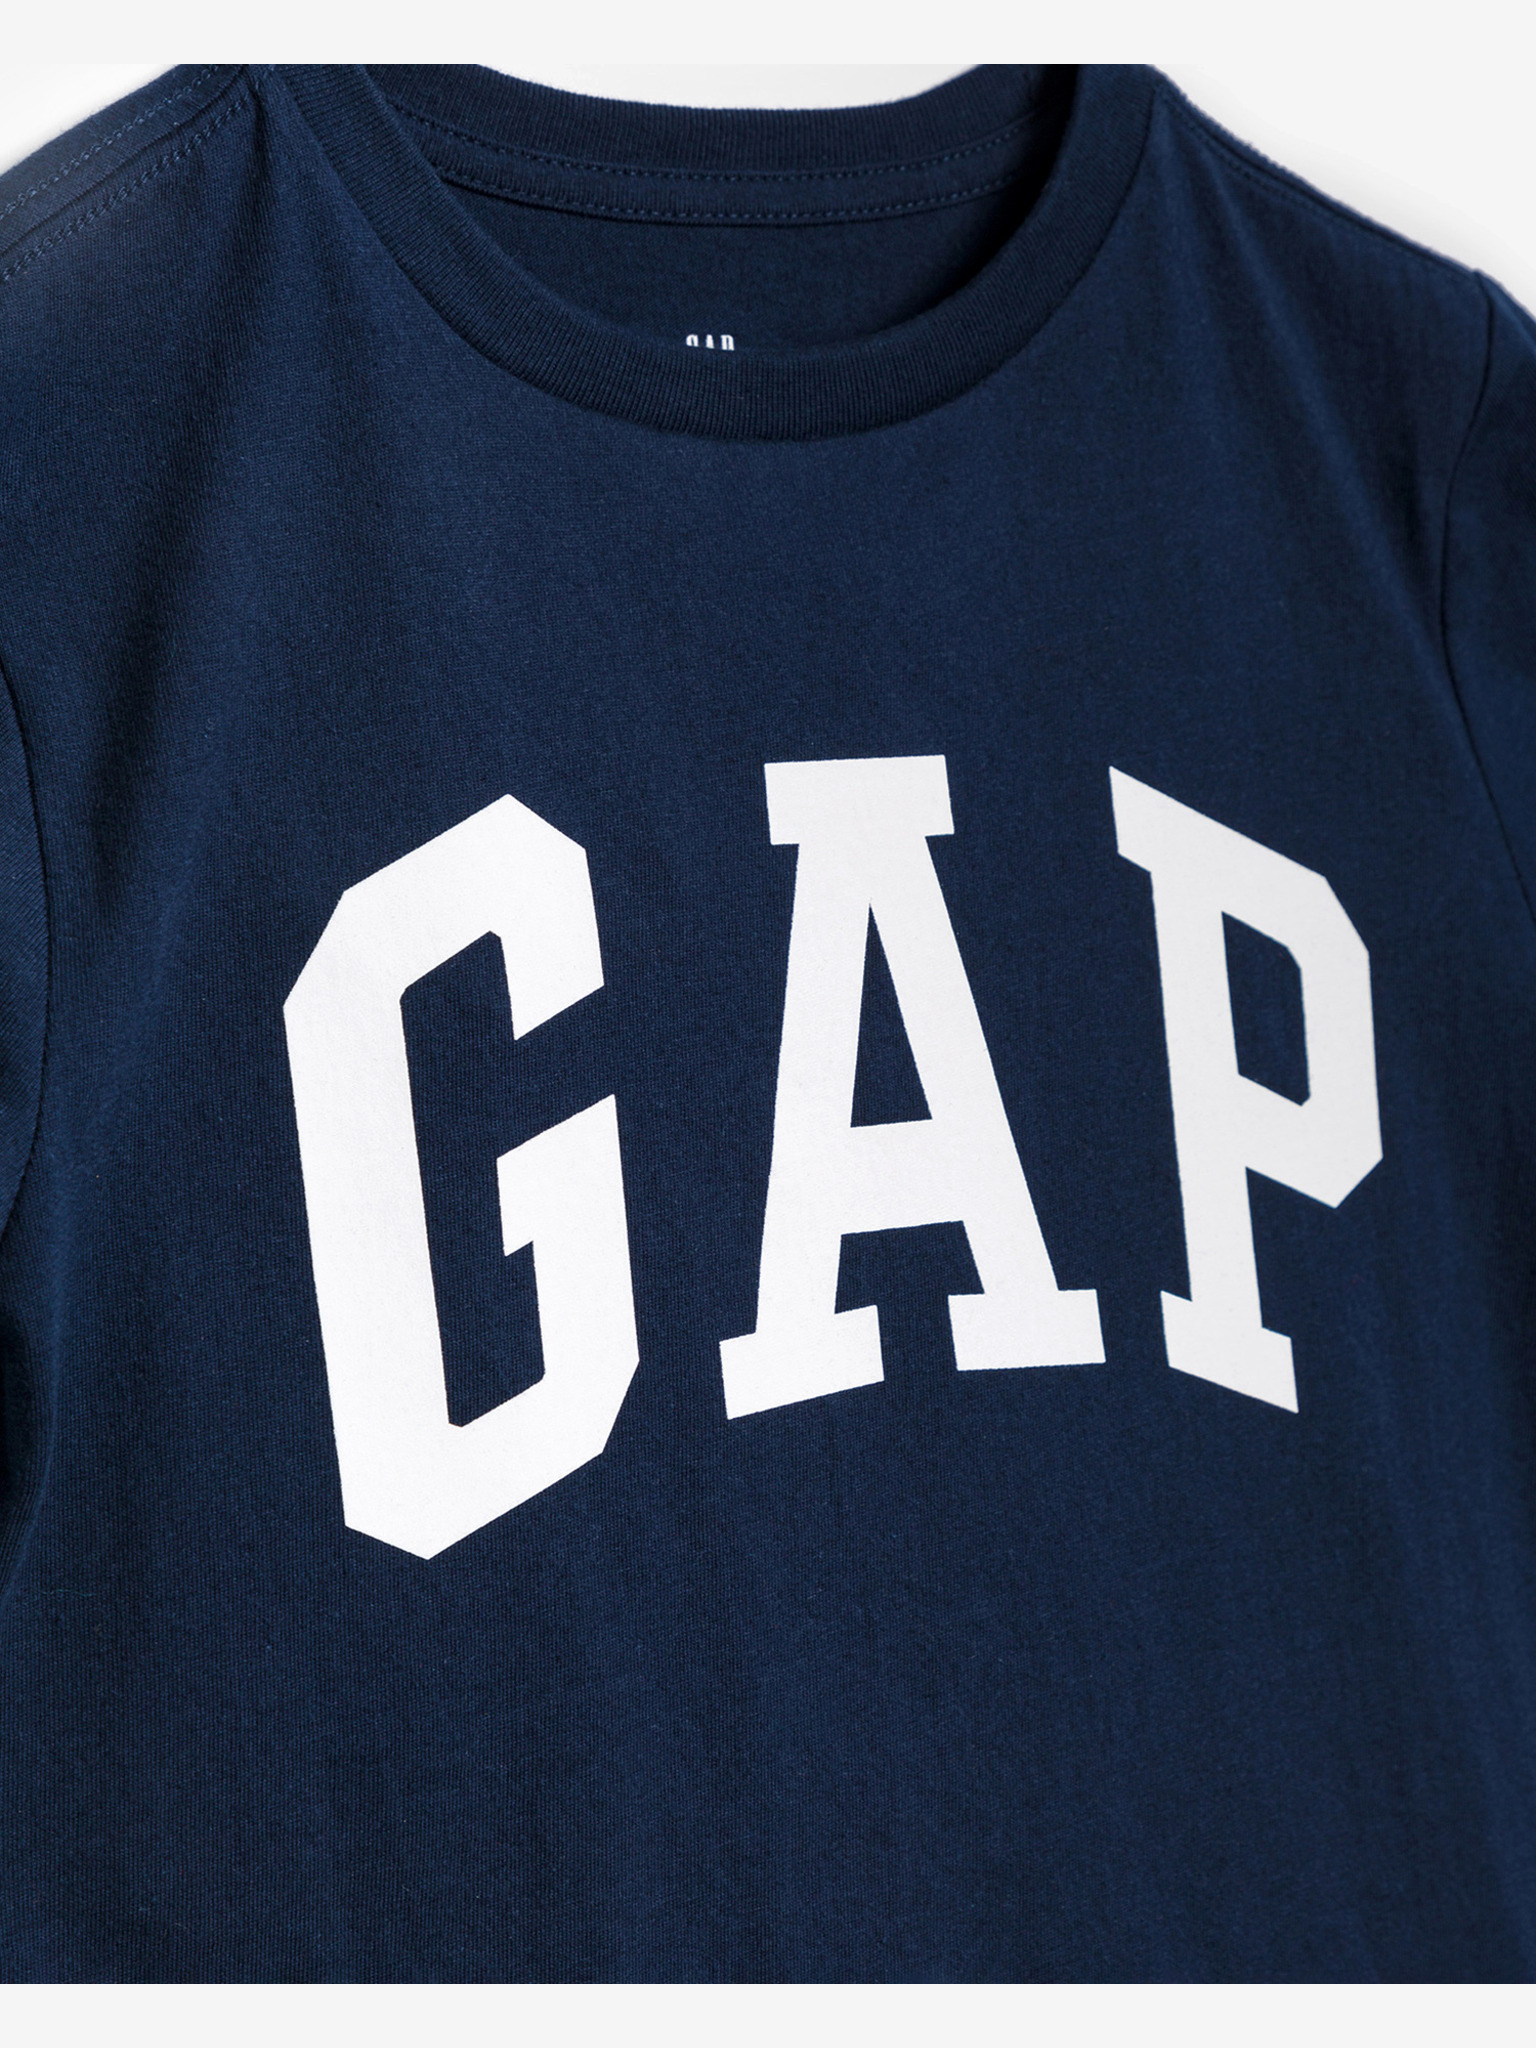 You Choose Gap Kids Boys Logo Short Sleeve Shirt Size 8 Medium 